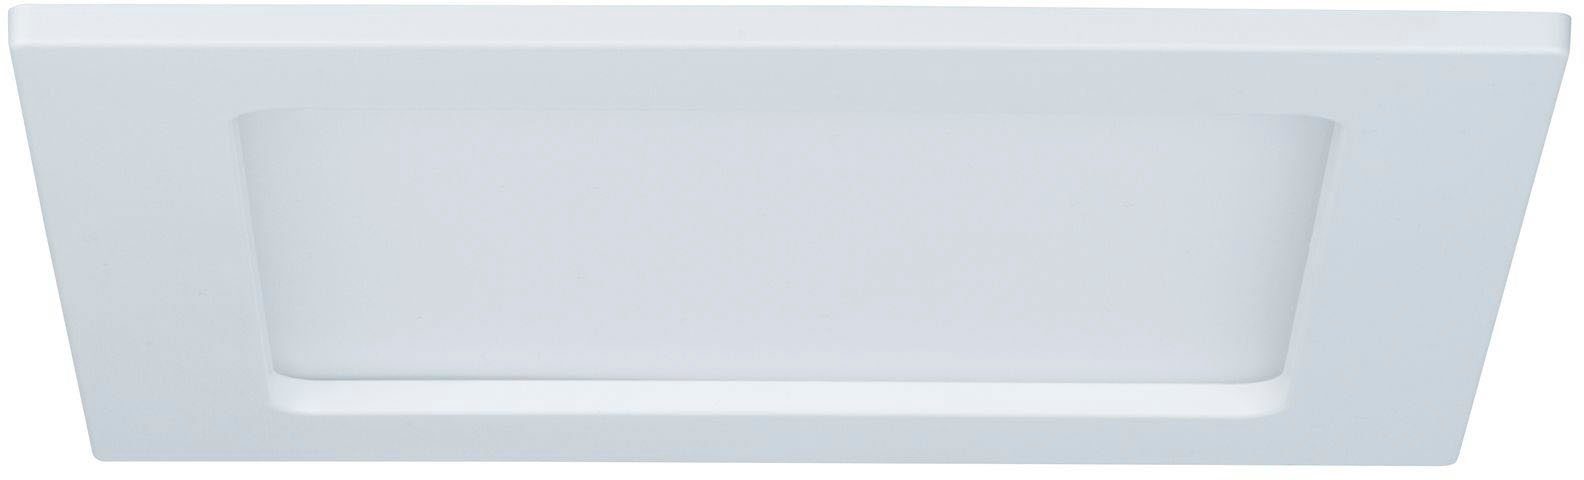 Paulmann LED Panel LED Einbaupanel eckig 165x165mm 11,1W 2.700K Weiß, LED fest integriert, Warmweiß, LED Einbaupanel eckig 165x165mm 11,1W 2.700K Weiß